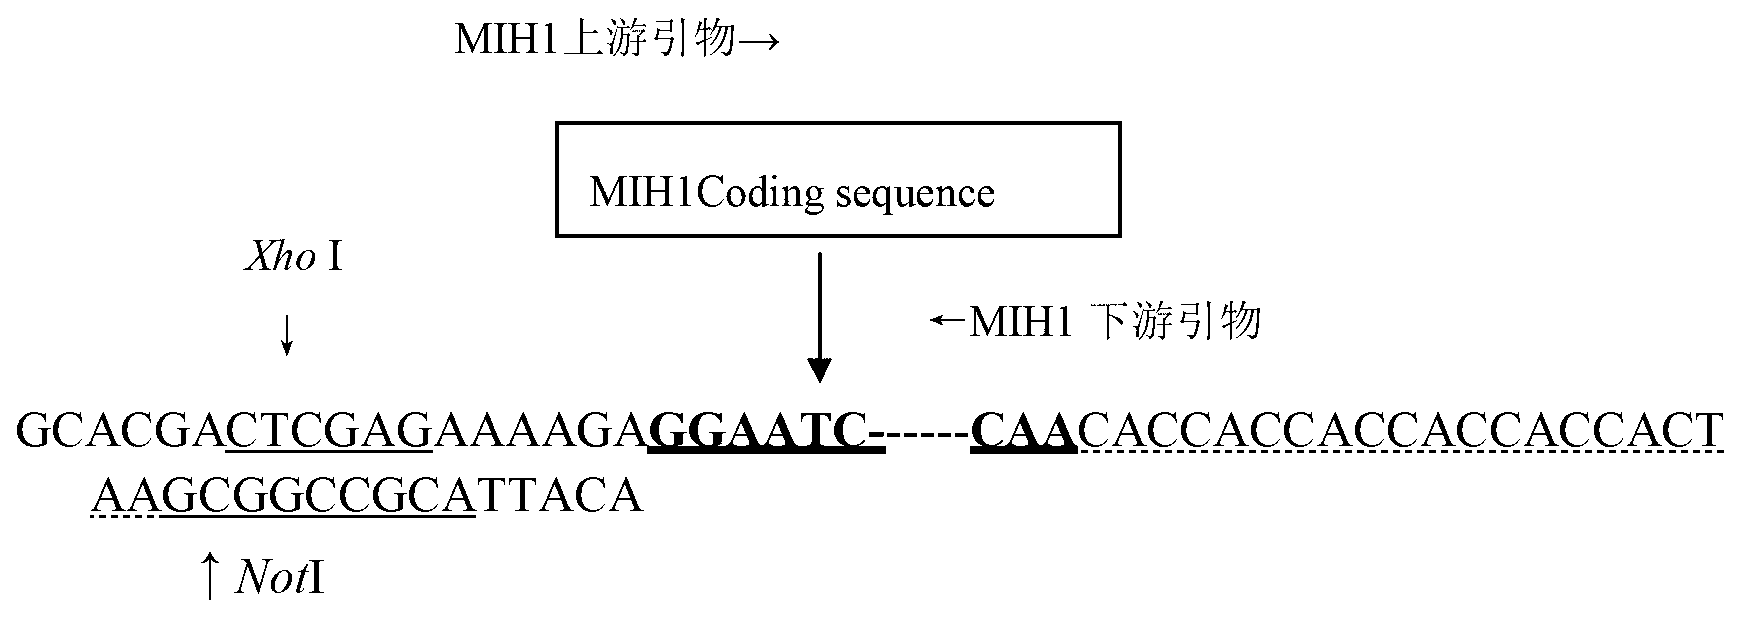 Eukaryotic expression method of molt-inhibiting hormone-1 gene of mitten crab